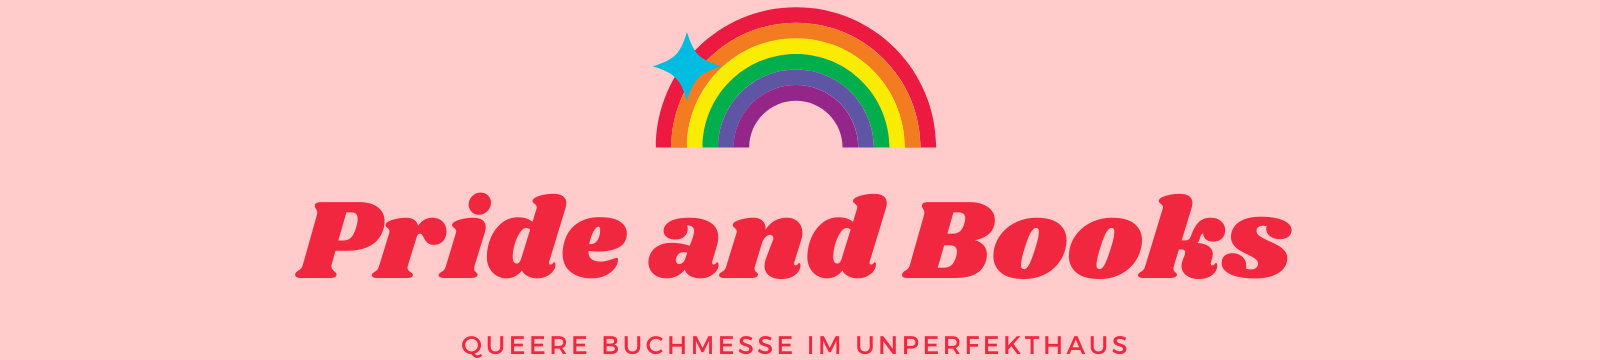 Pride and Books Die queere Buchmesse im Unperfekthaus